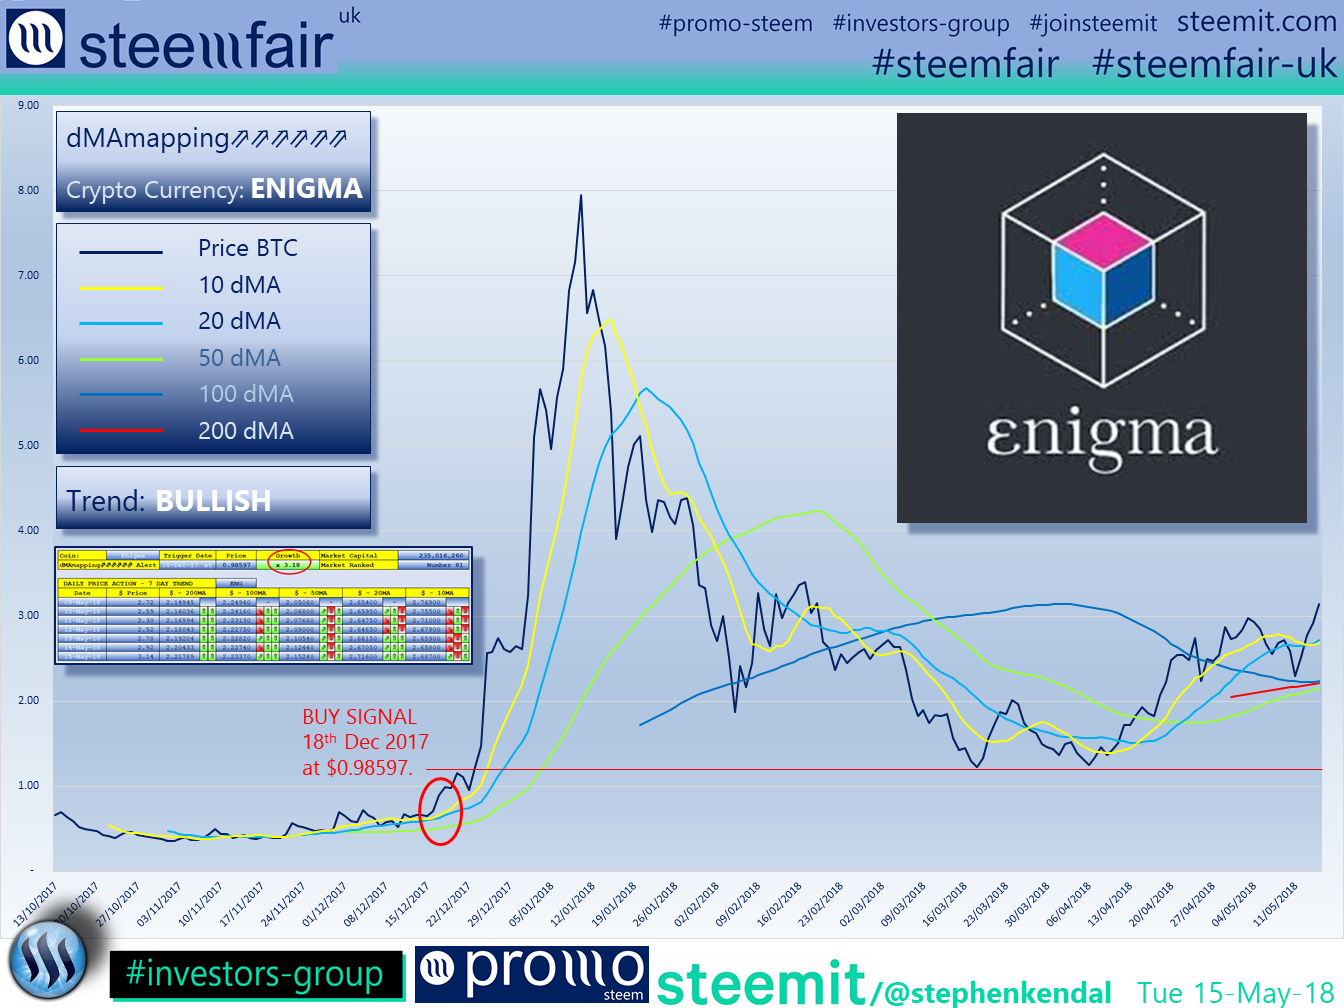 SteemFair SteemFair-uk Promo-Steem Investors-Group Enigma